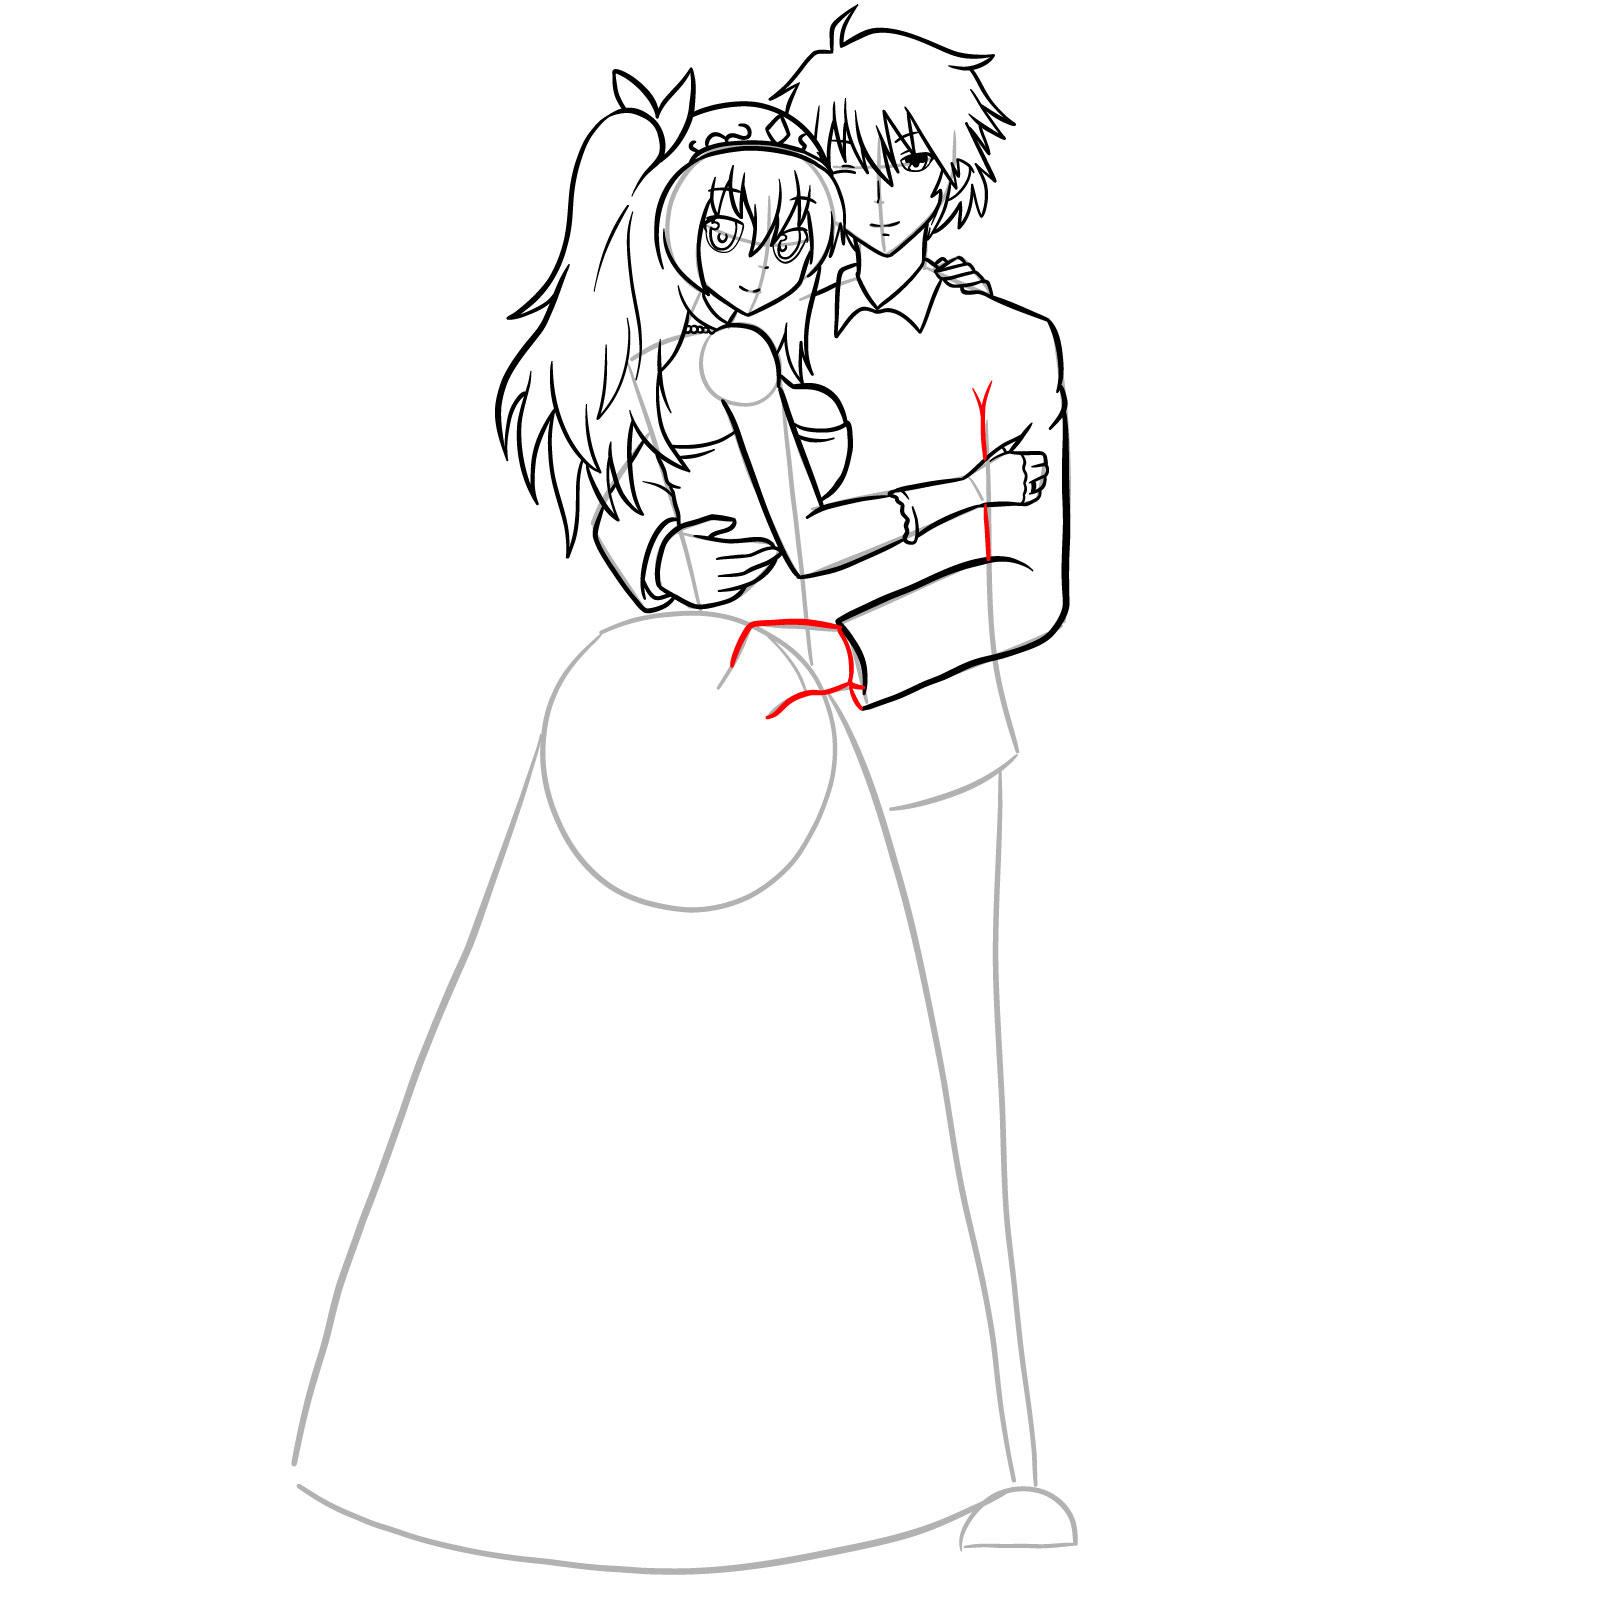 How to draw Ikki and Stella's wedding - step 42